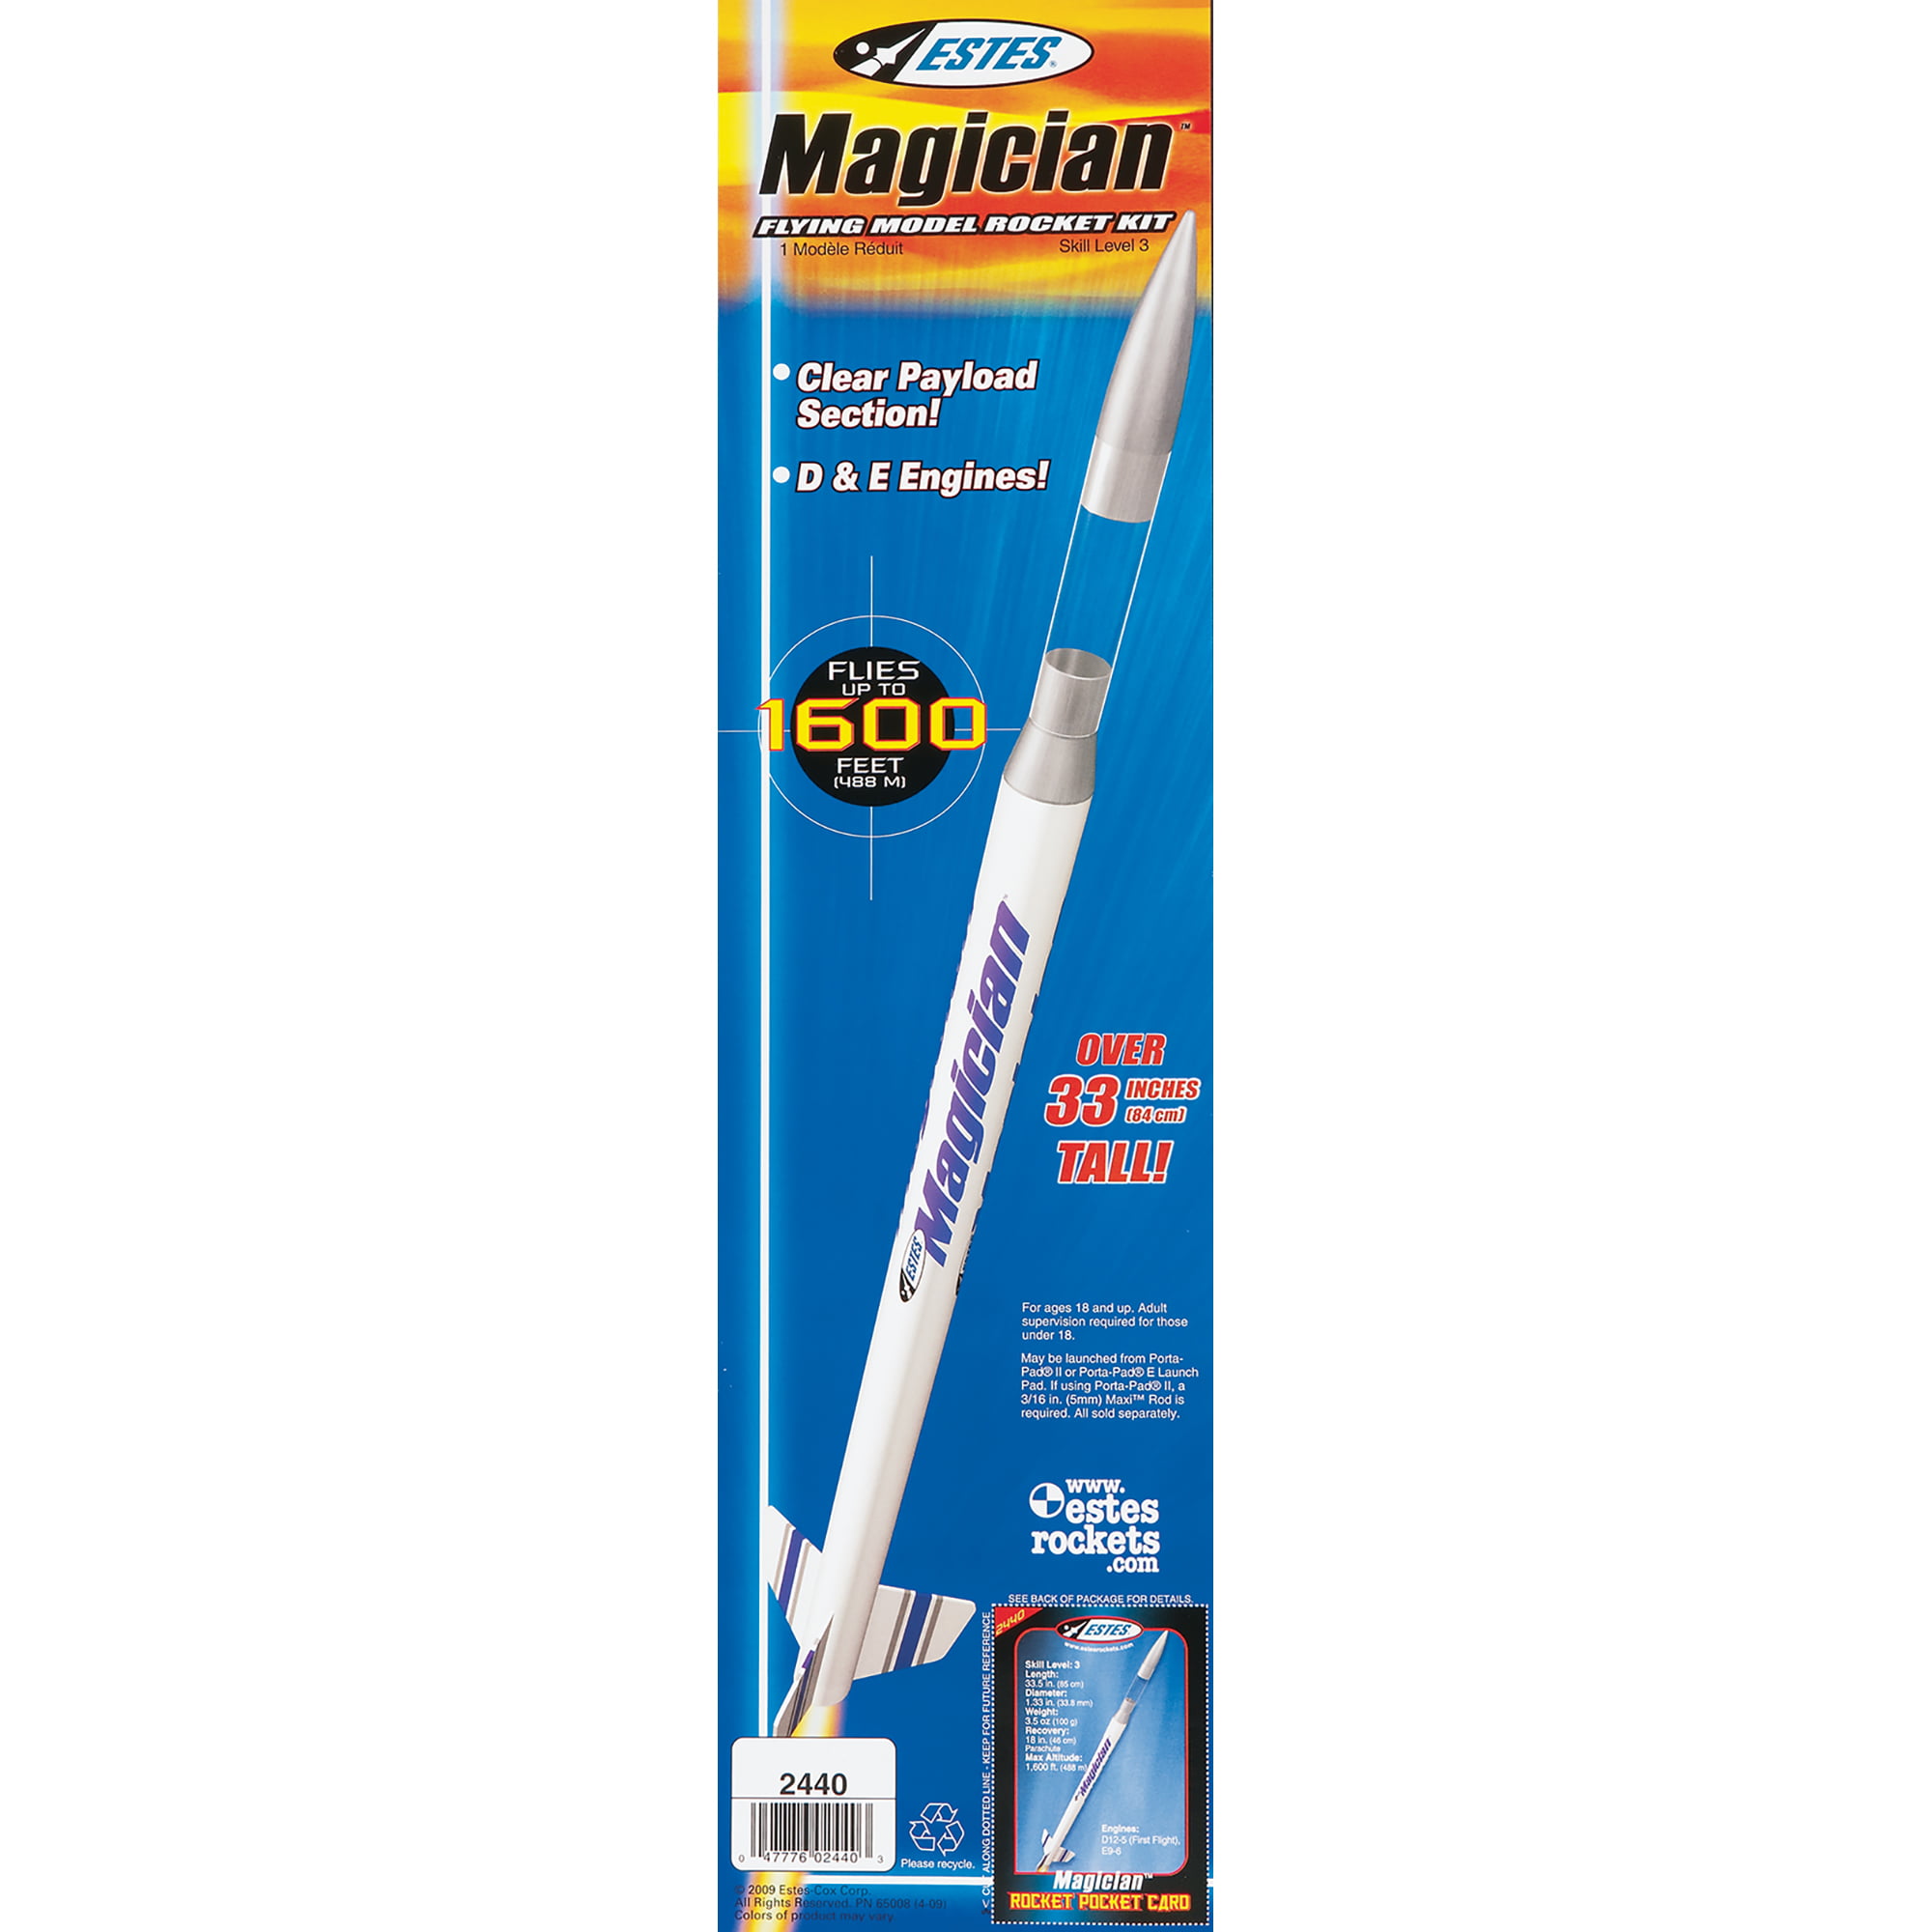 Estes 2440 Magician Flying Model Rocket Kit